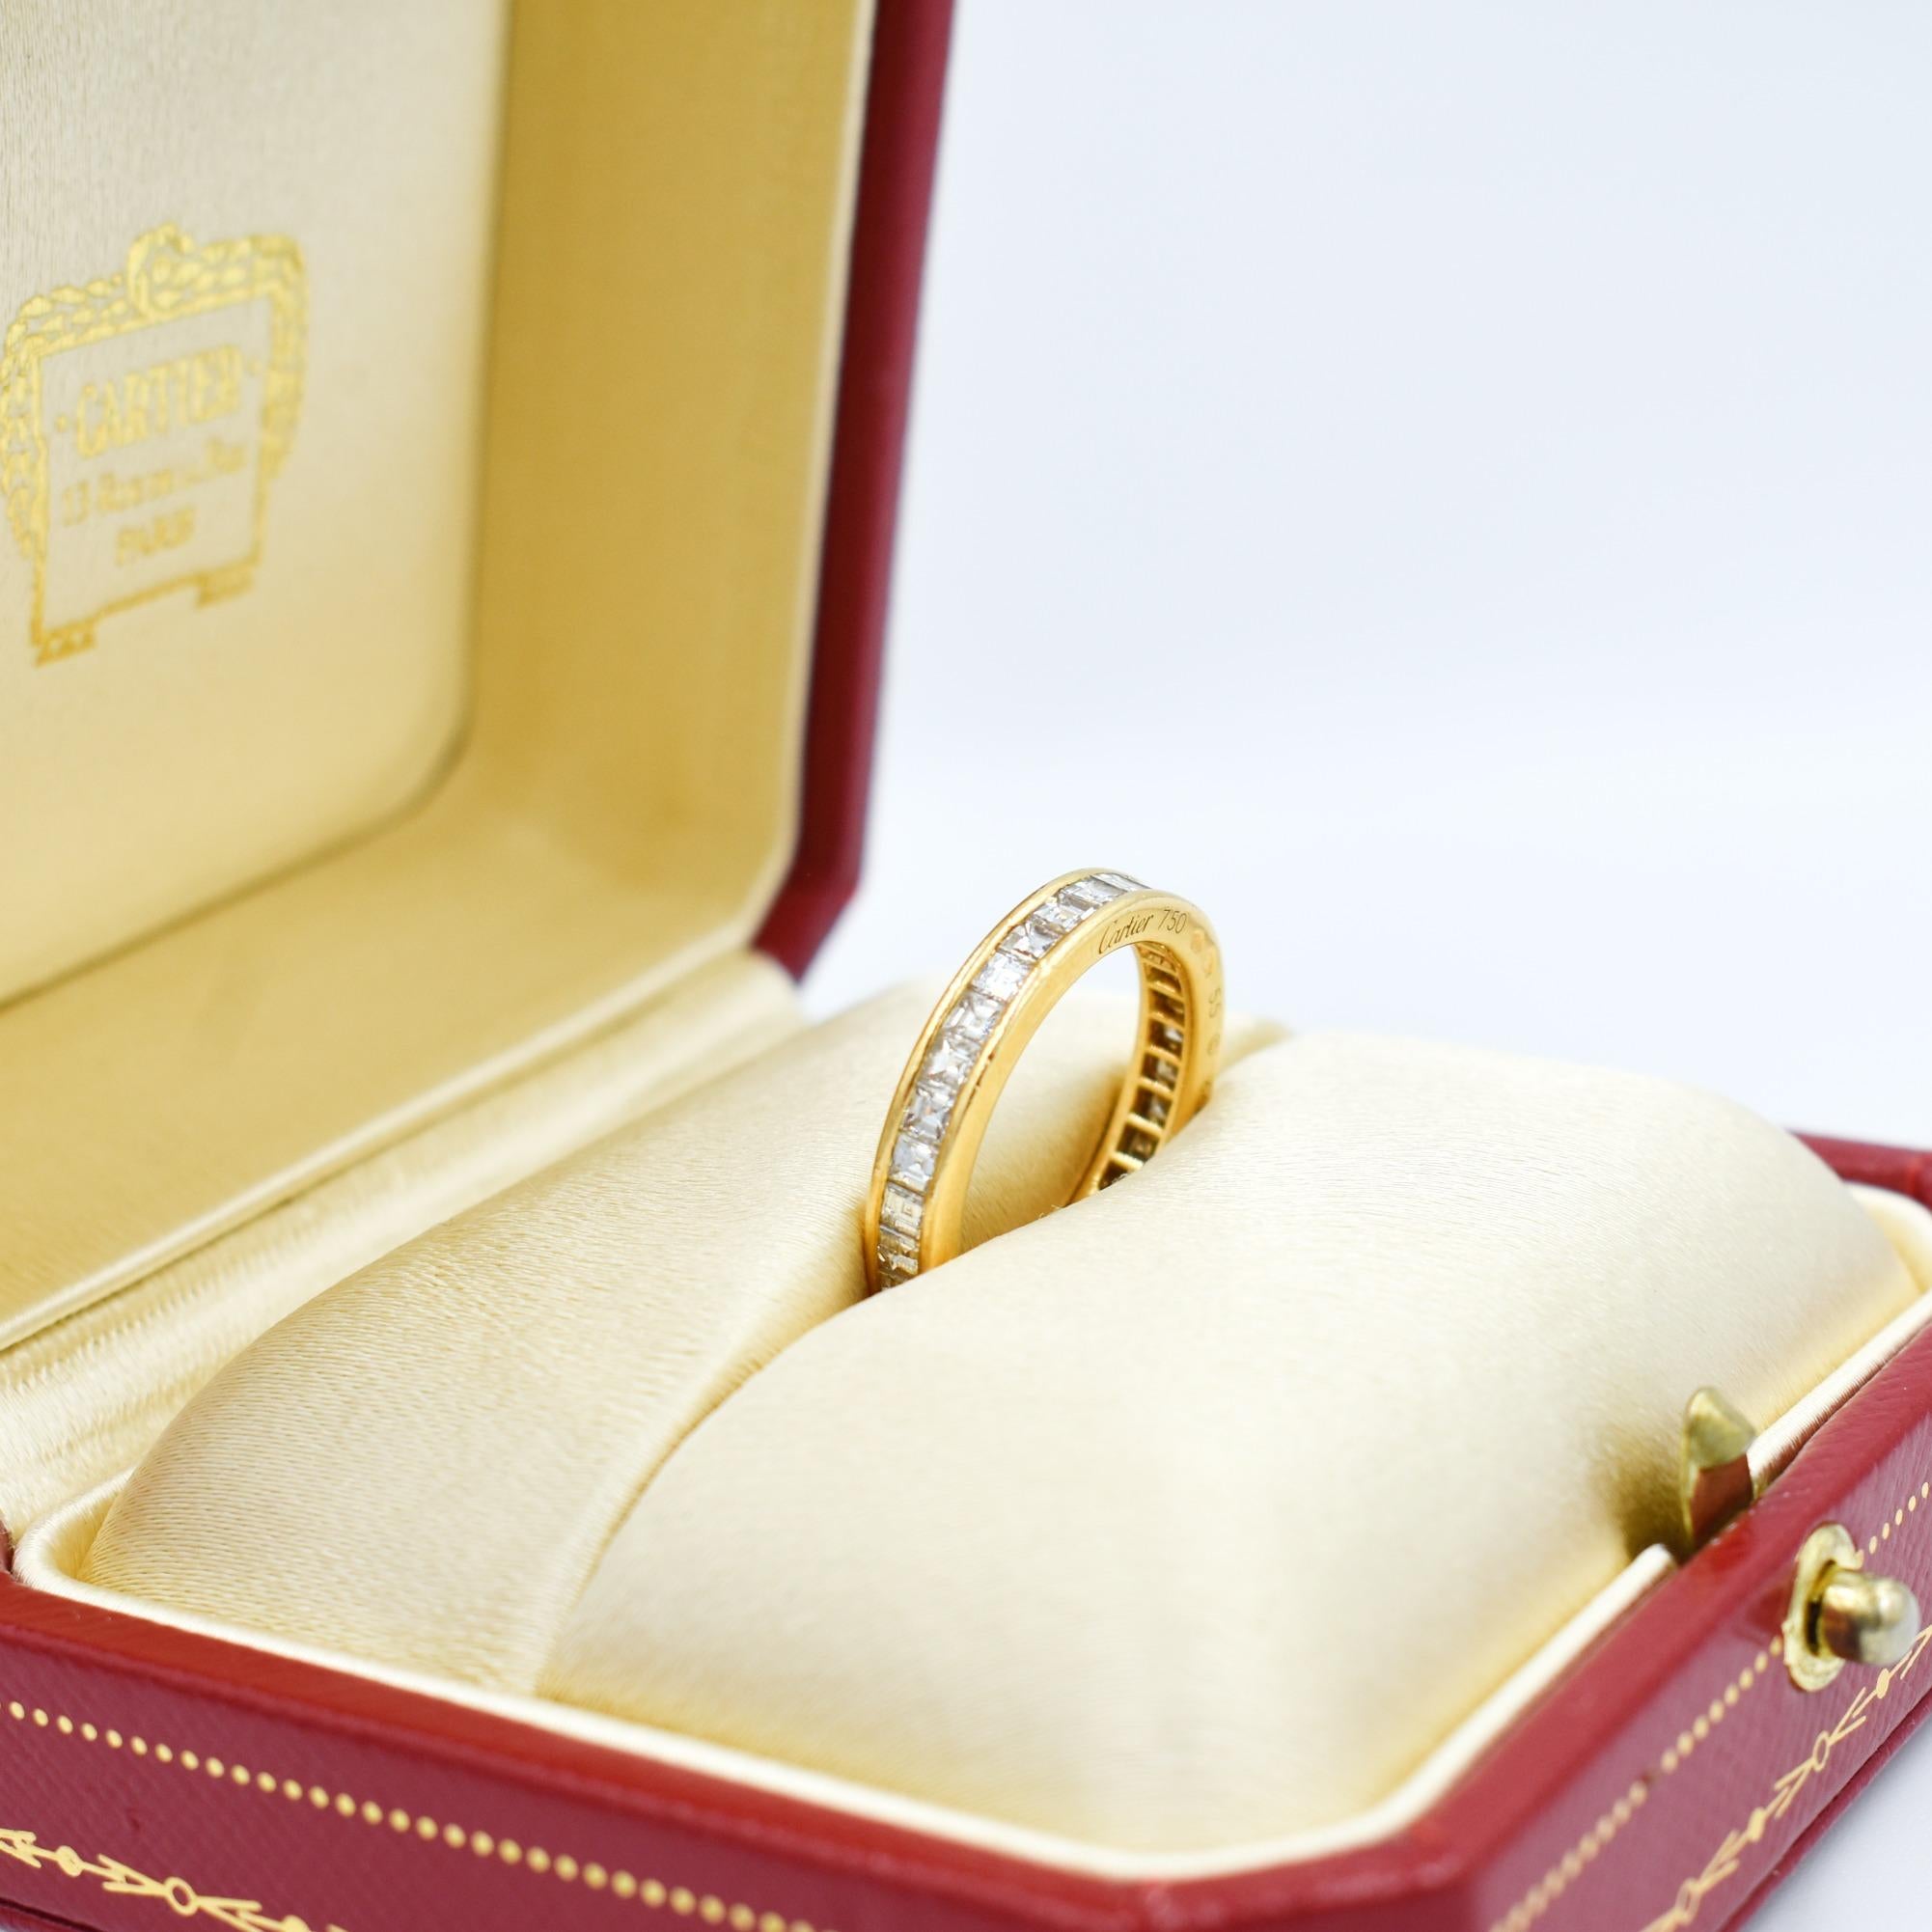 Cartier wedding ring 18k yellow gold,
Around 2 carat of diamonds princess cut
signed, factory numbers and box

Cartier retail price 12500$
